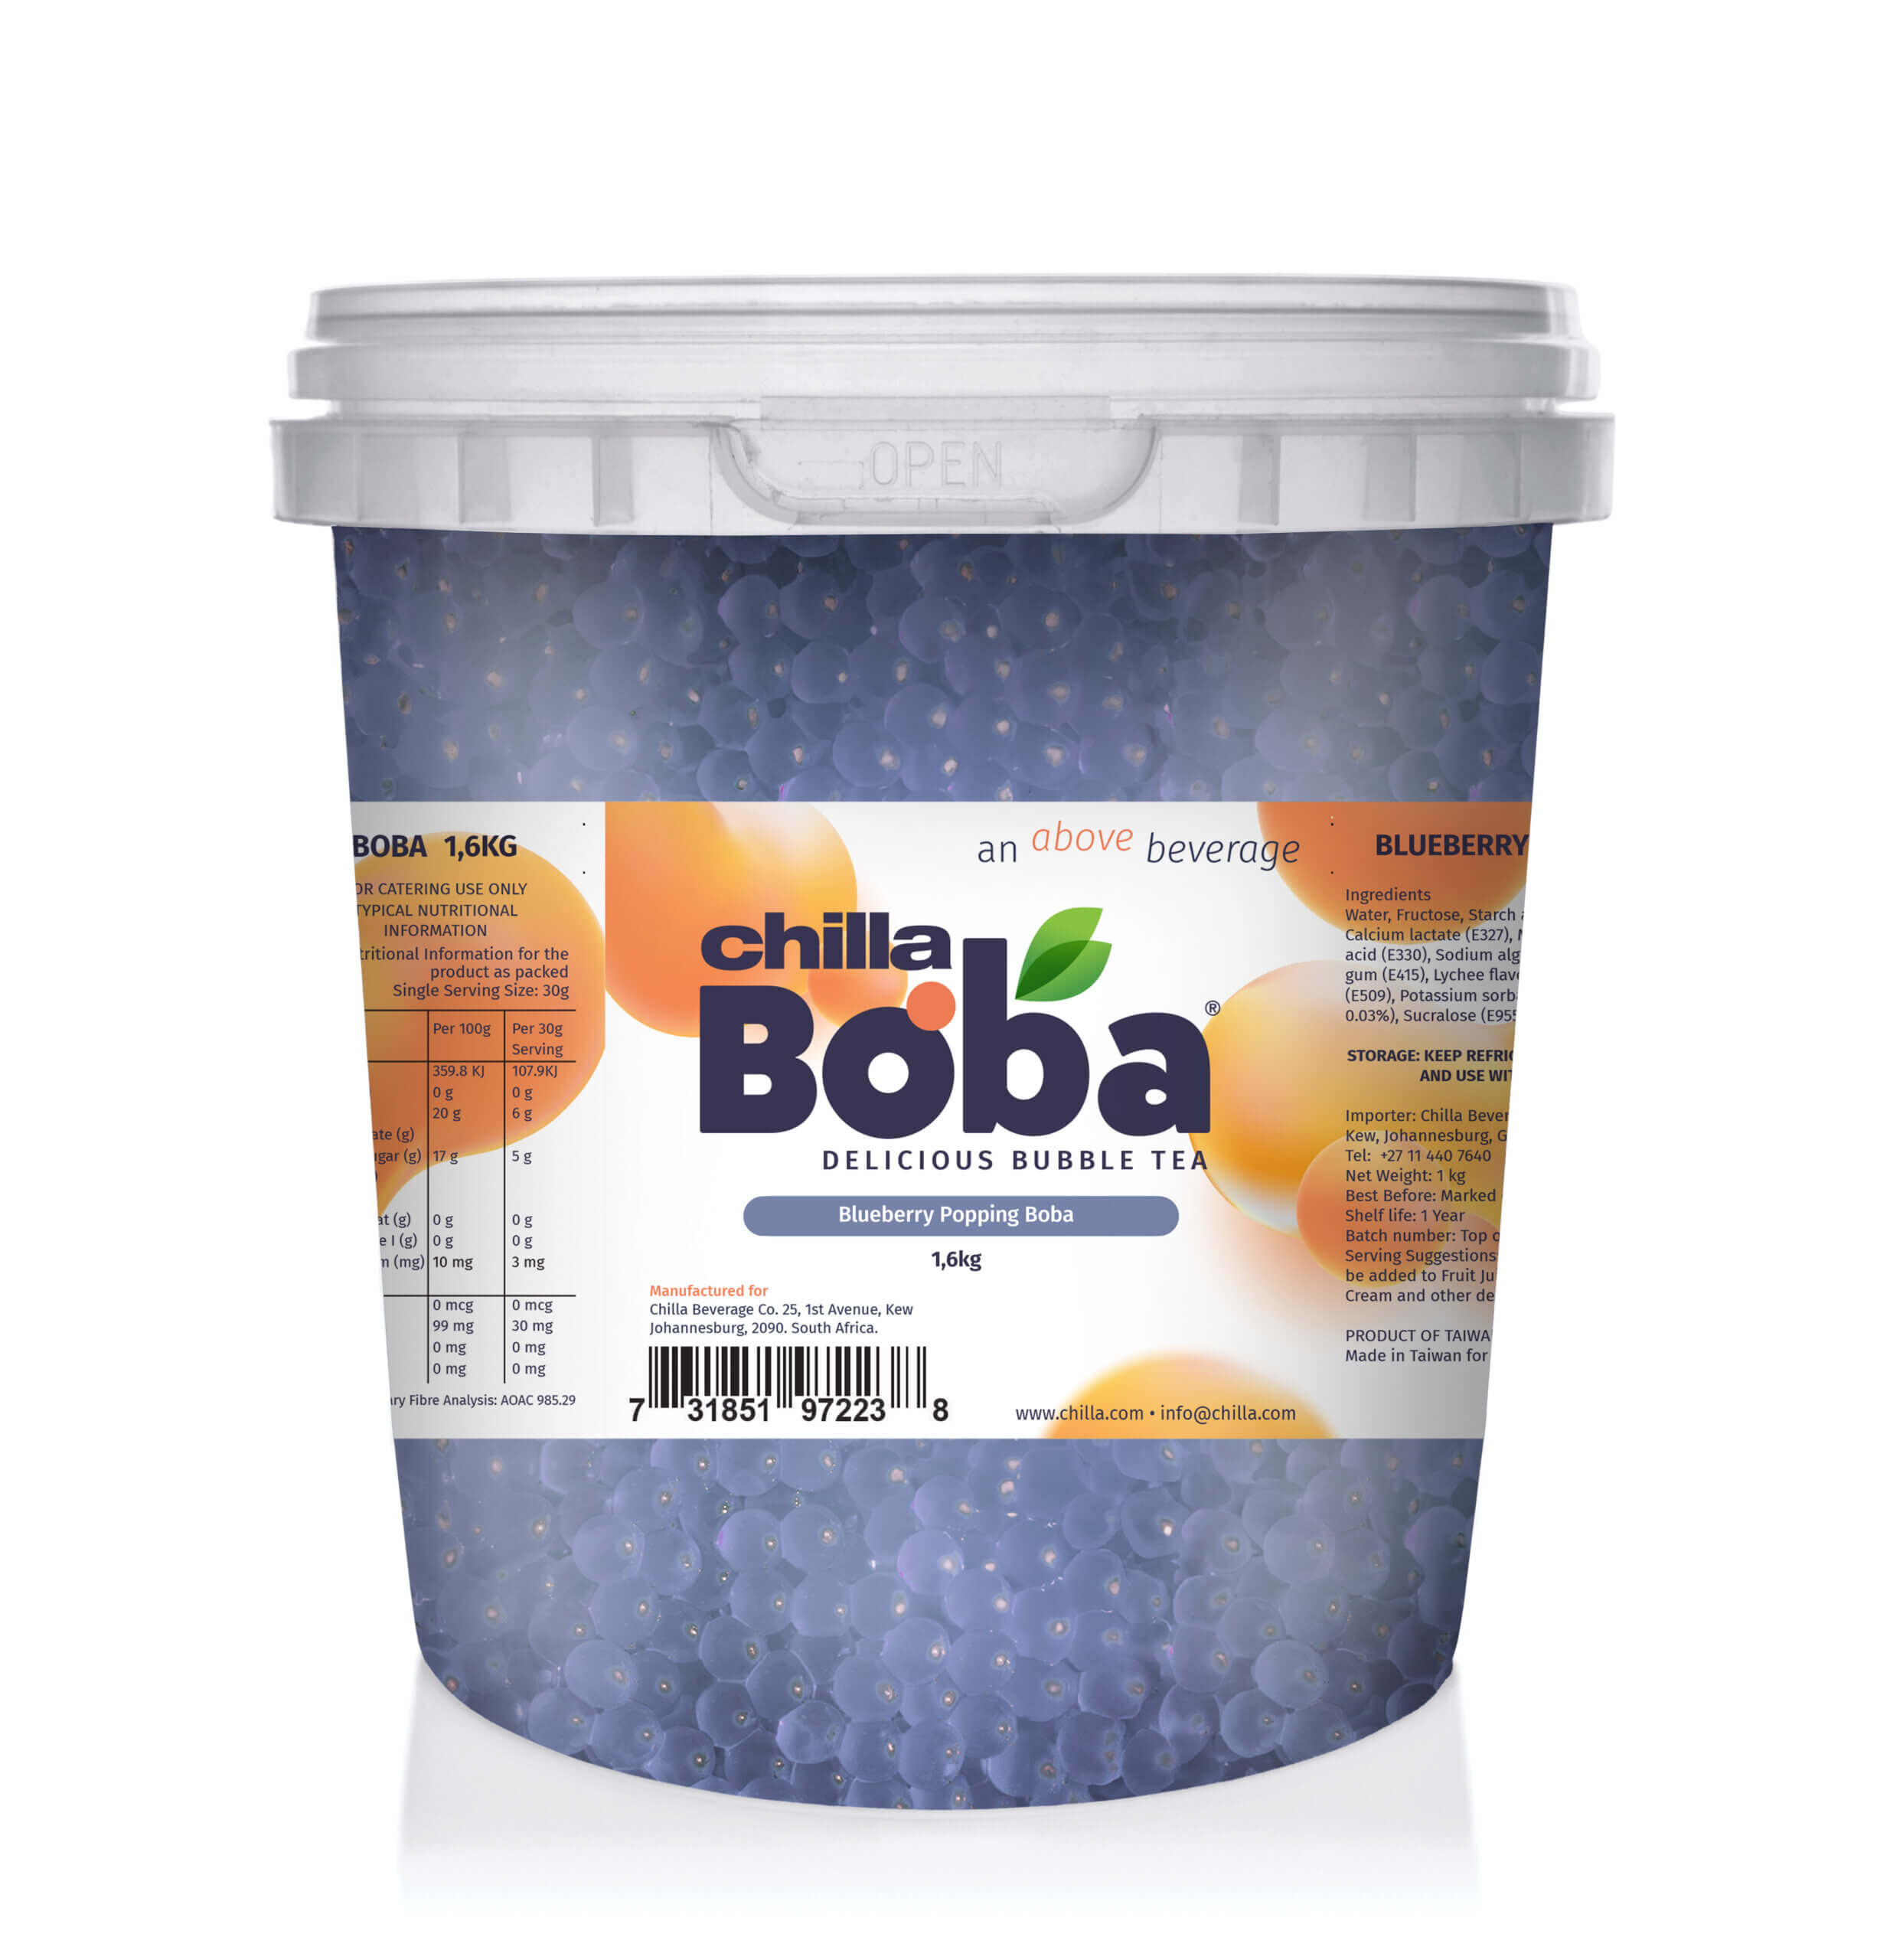 Blueberry Popping Boba 1.6kg